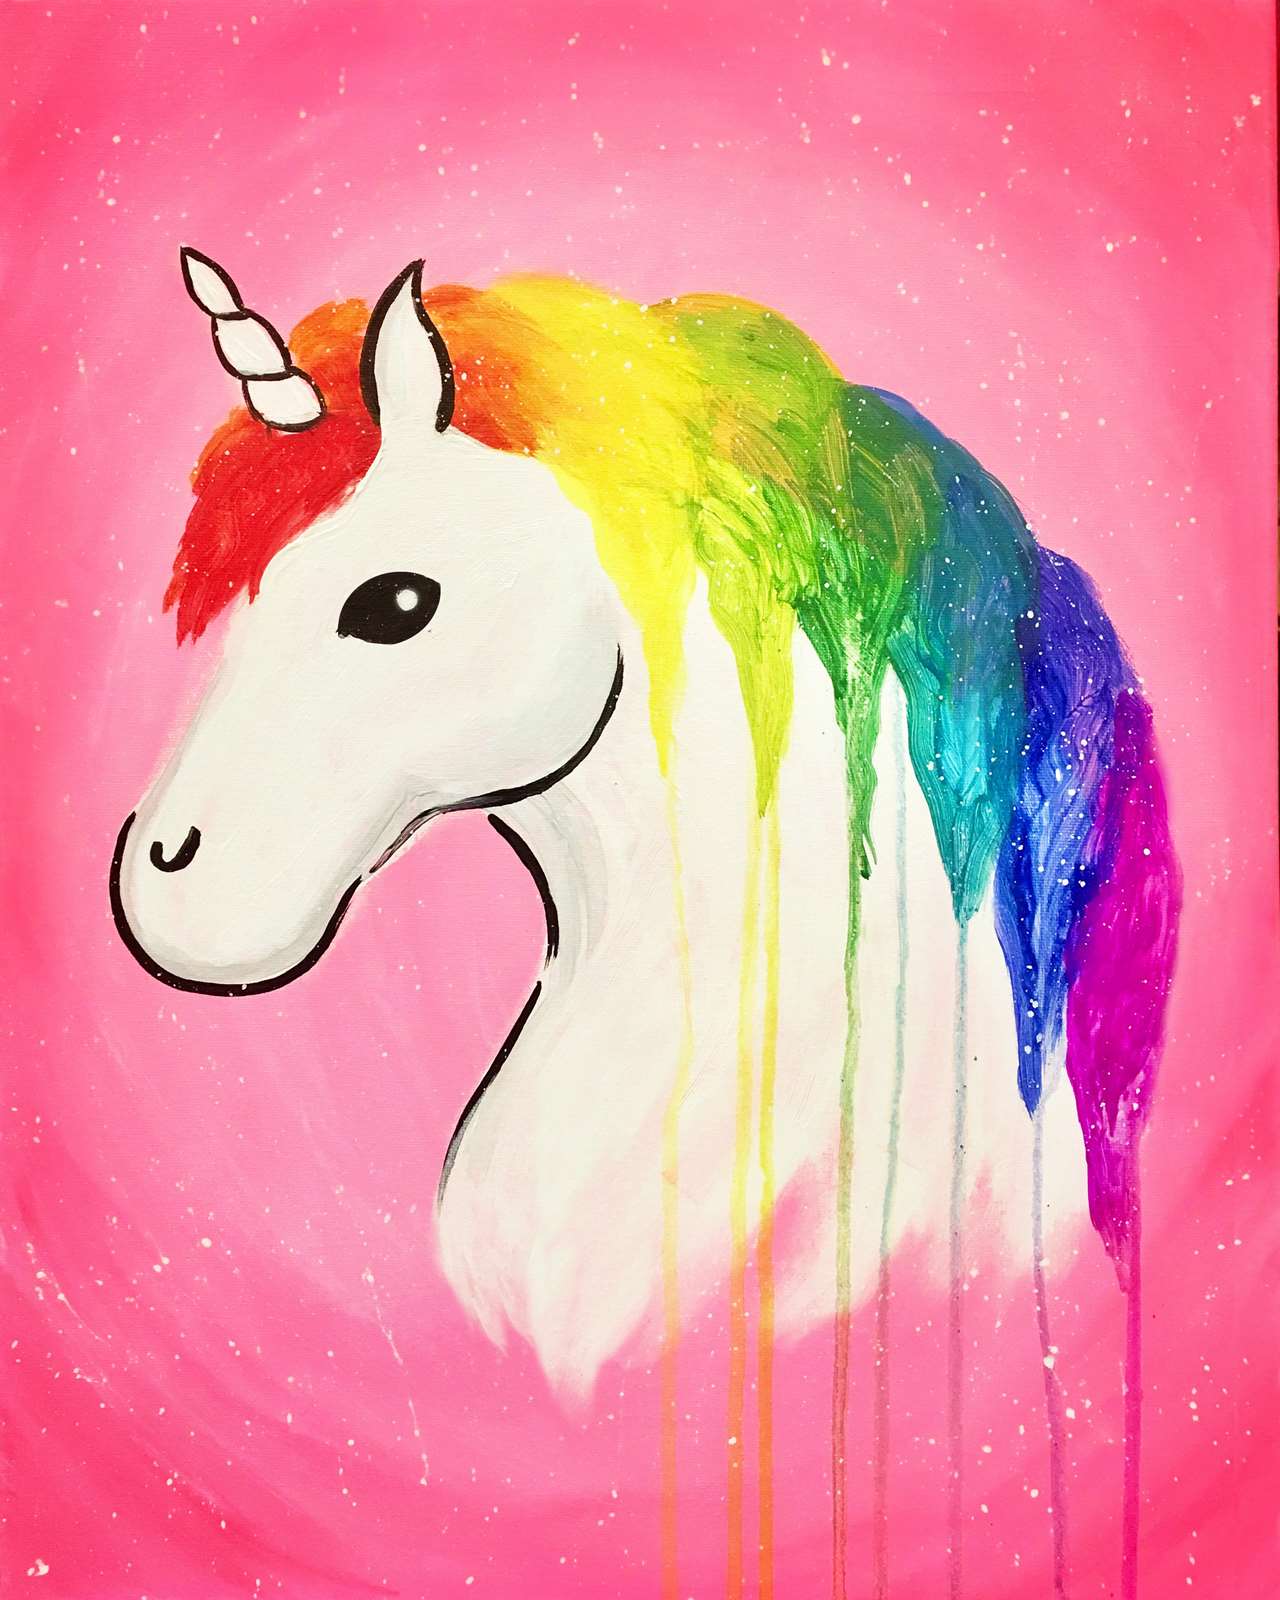 https://paintings.pinotspalette.com/rainbow-unicorn-hdtv.jpg?v=10027507